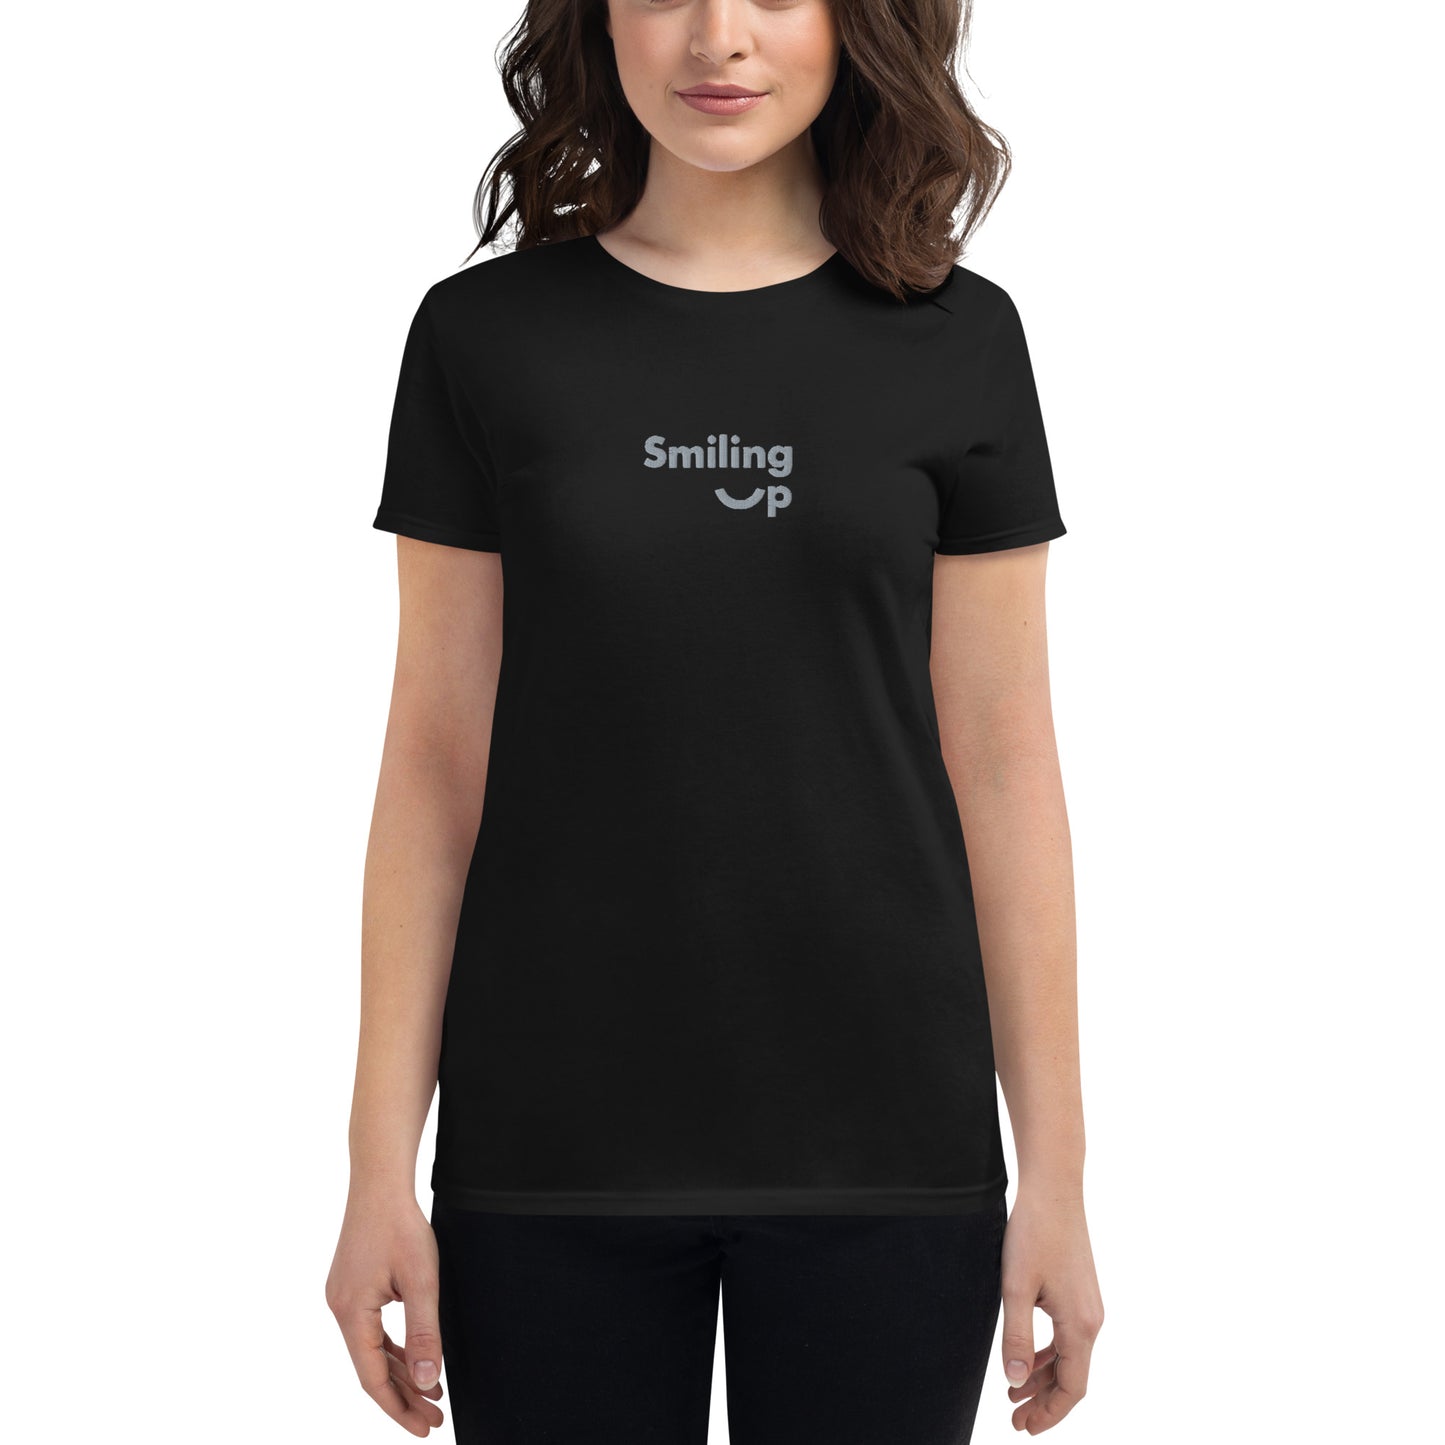 Smiling Up - Women's short sleeve t-shirt